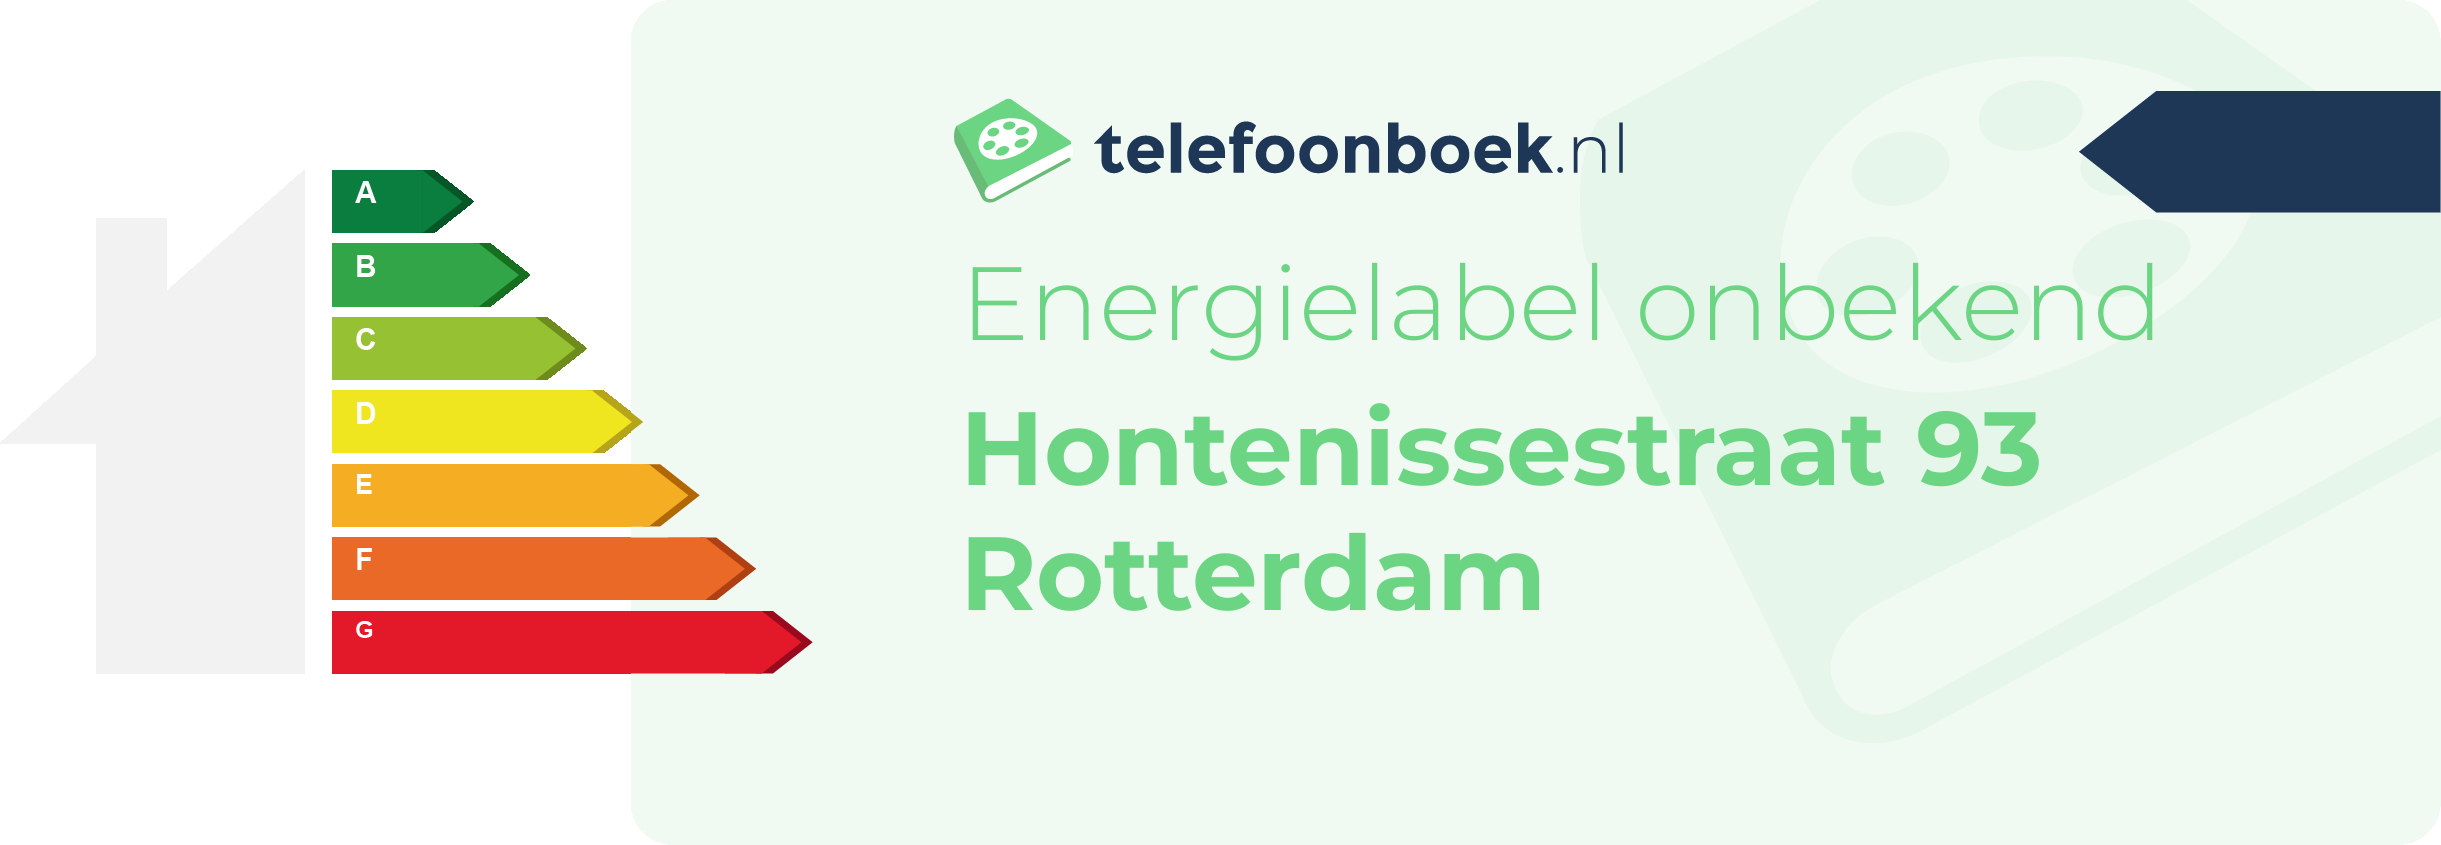 Energielabel Hontenissestraat 93 Rotterdam